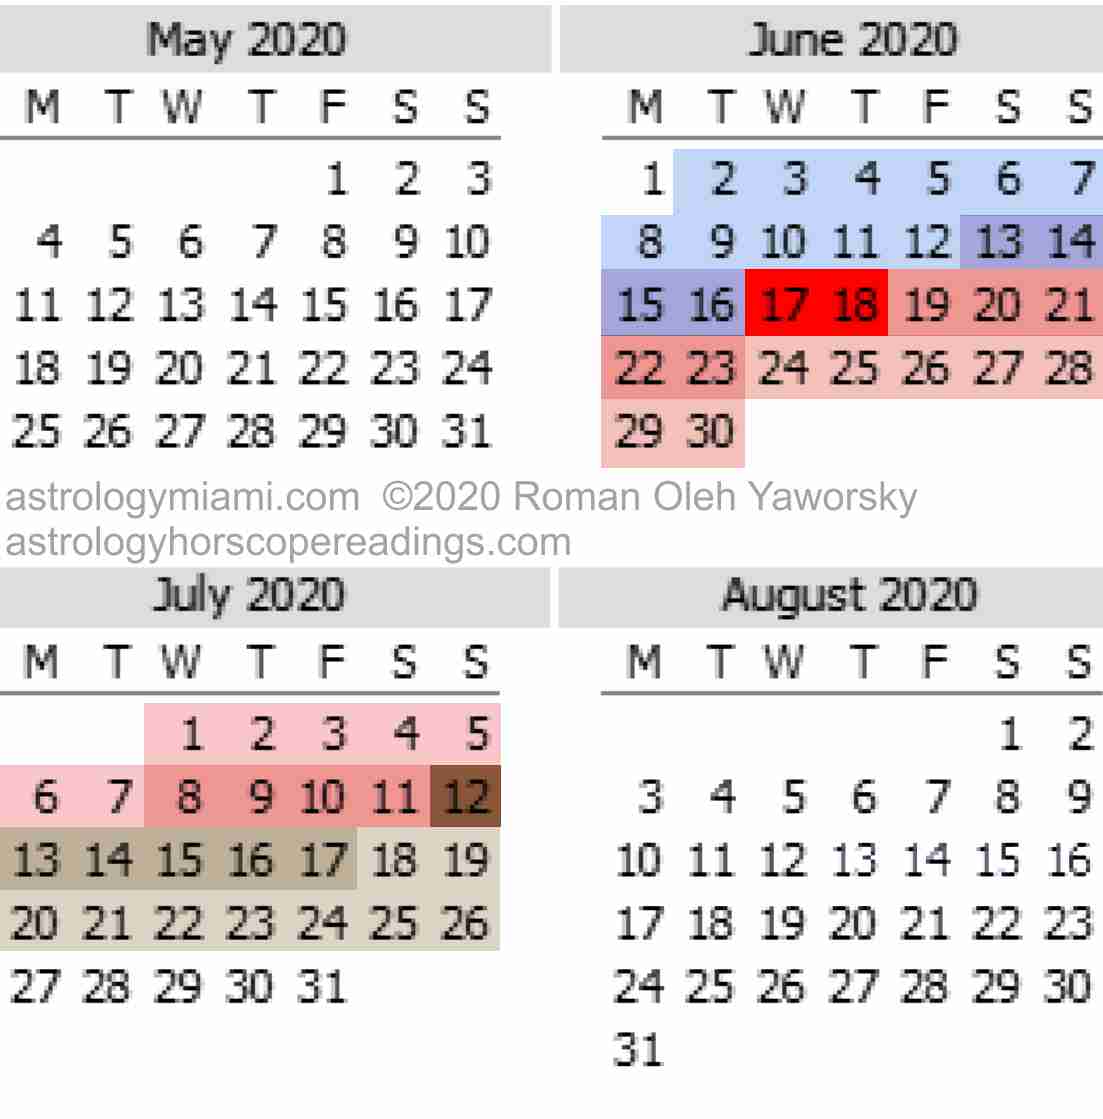 Mercury Retrograde Calendar, May to August 2020.  Copyright 2018 by Roman Oleh Yaworsky, www.astrologyhoroscopereadings.com